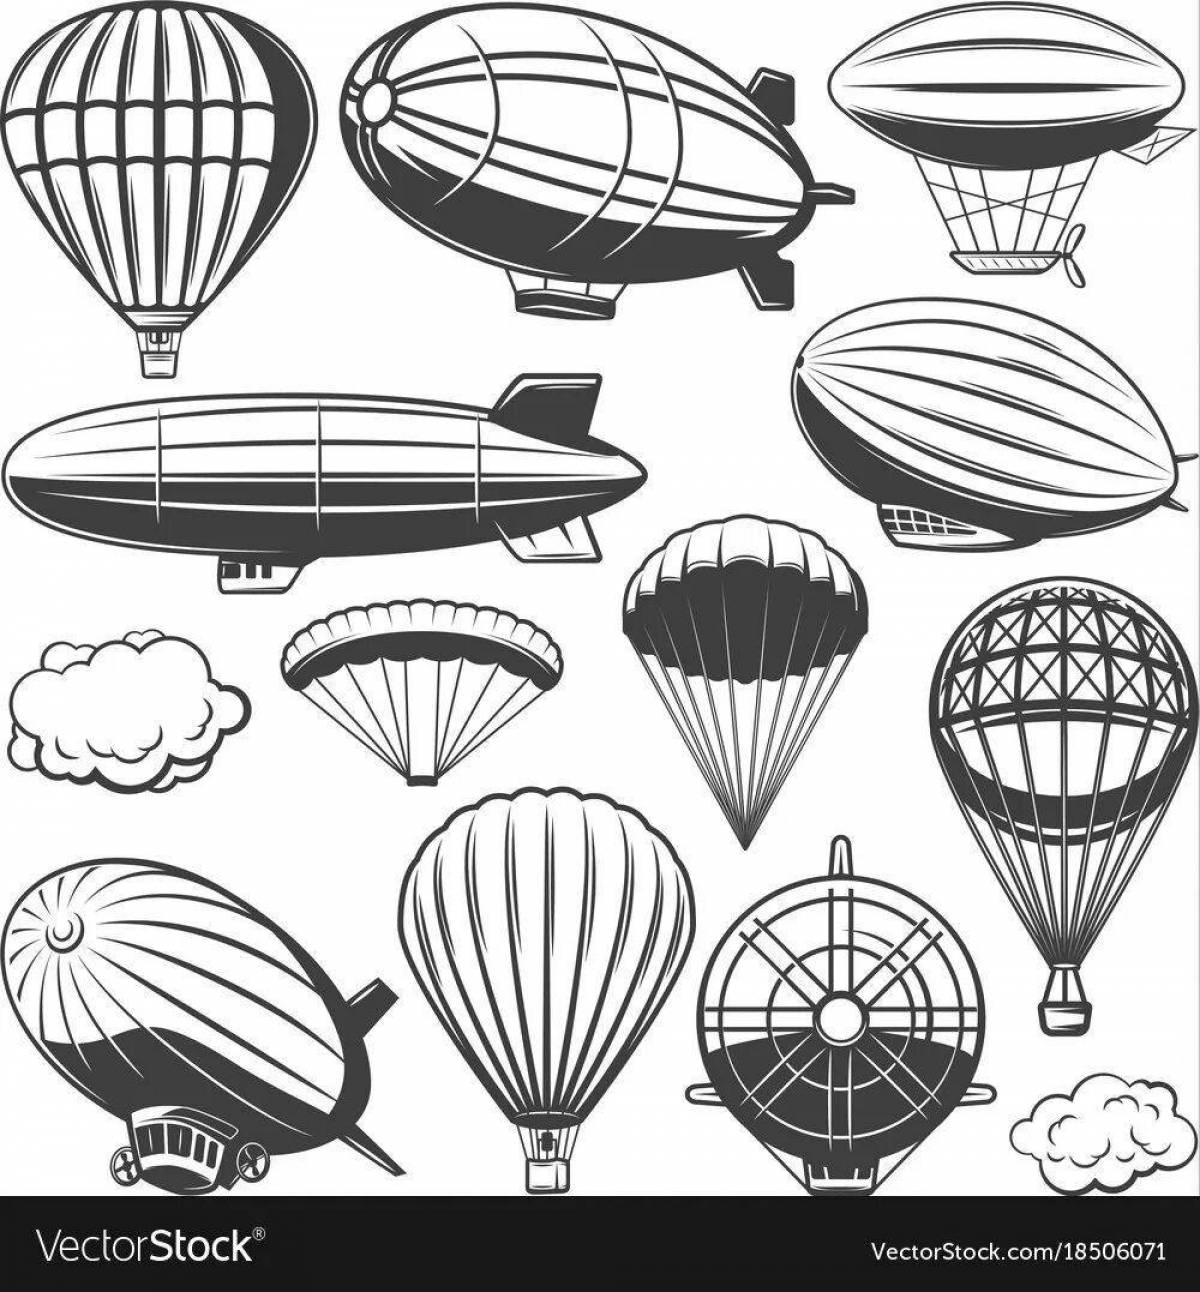 Wonderful airship coloring book for kids